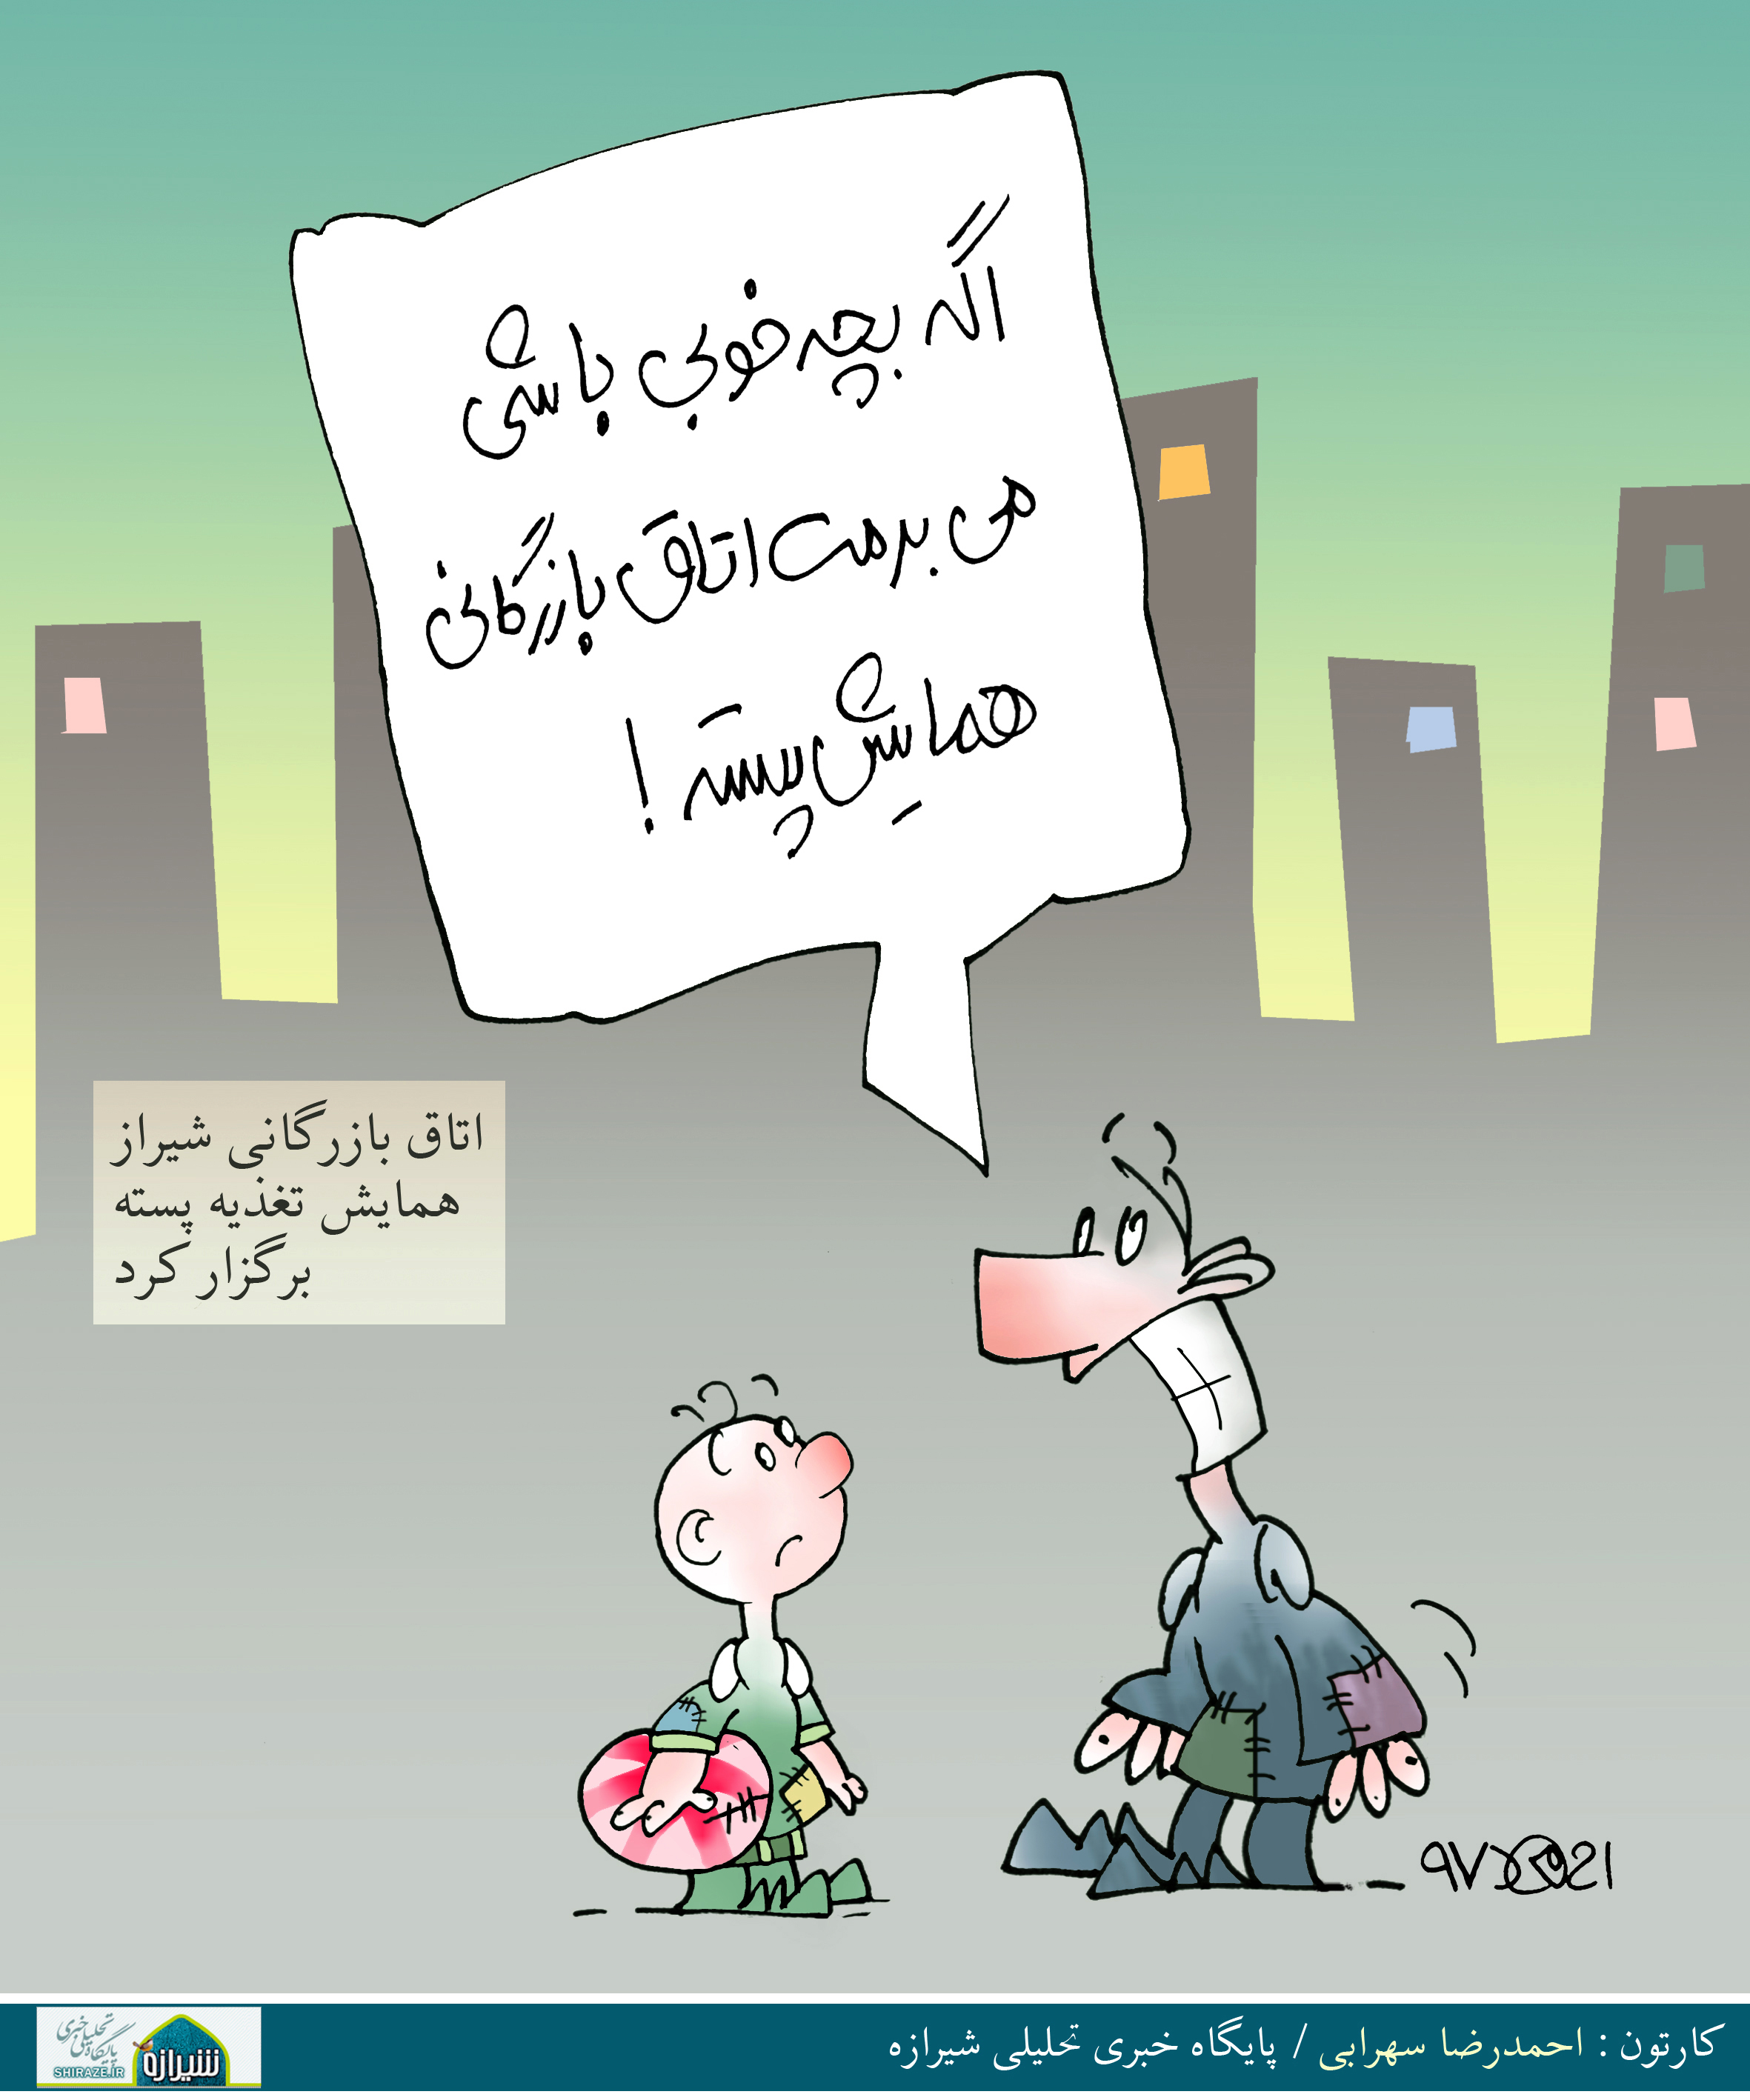 کاریکاتور شیرازه؛ همایش تغذیه پسته!